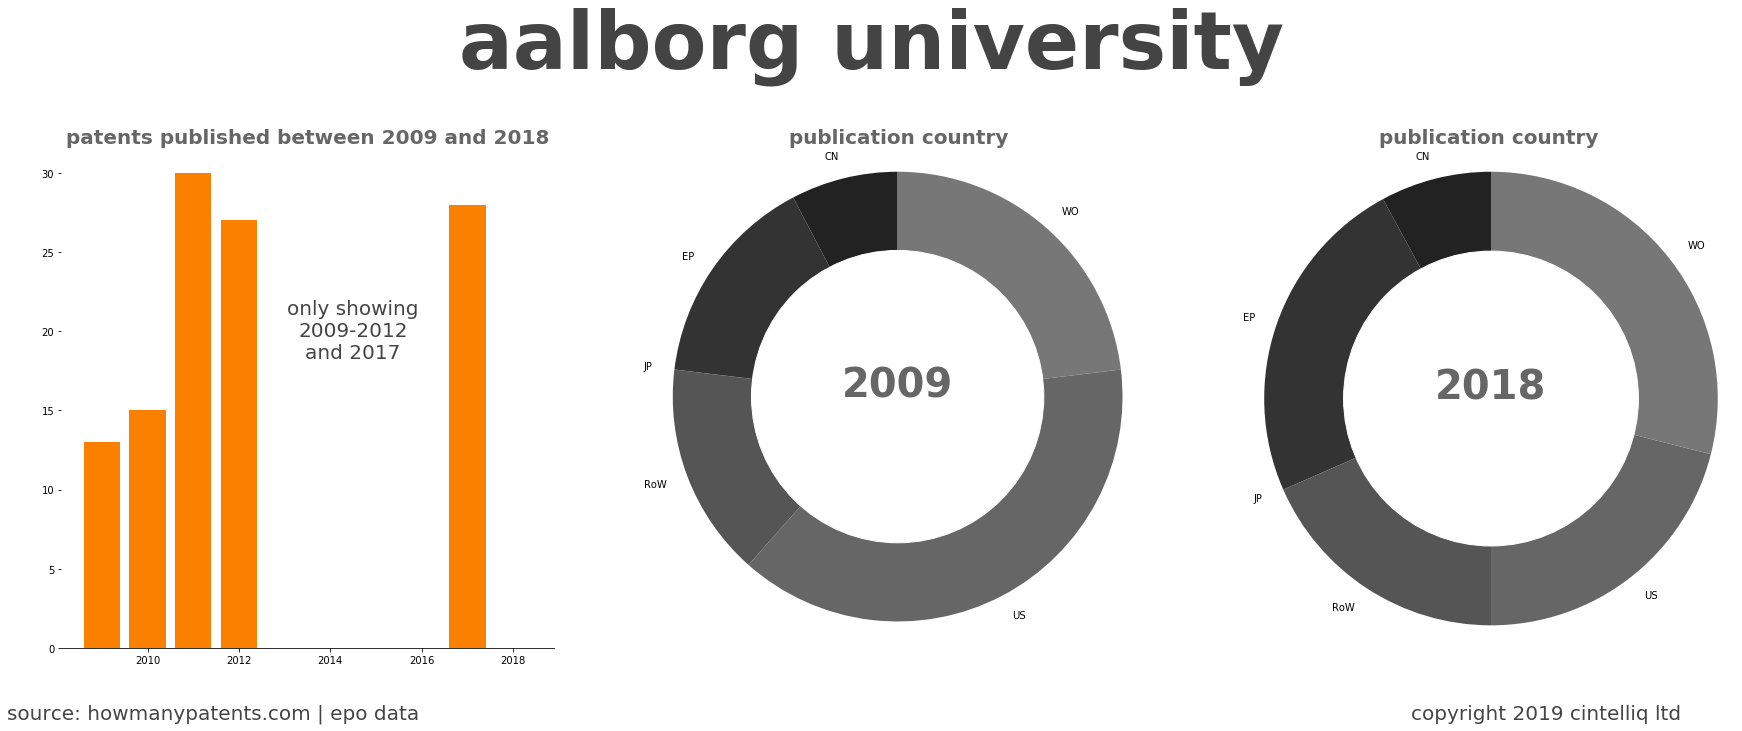 summary of patents for Aalborg University